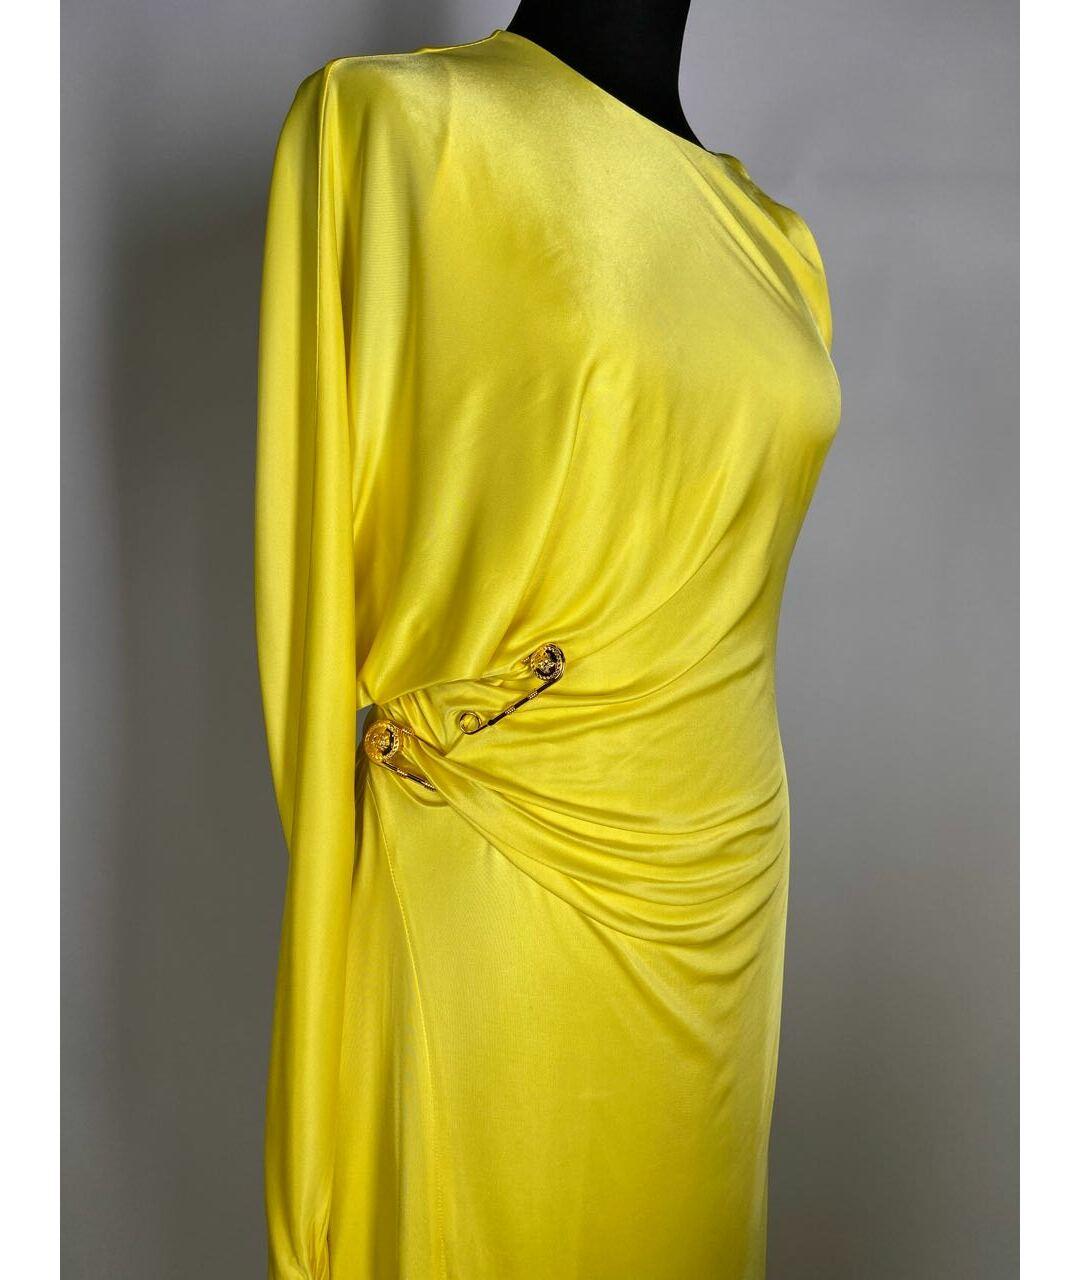 versace yellow dress